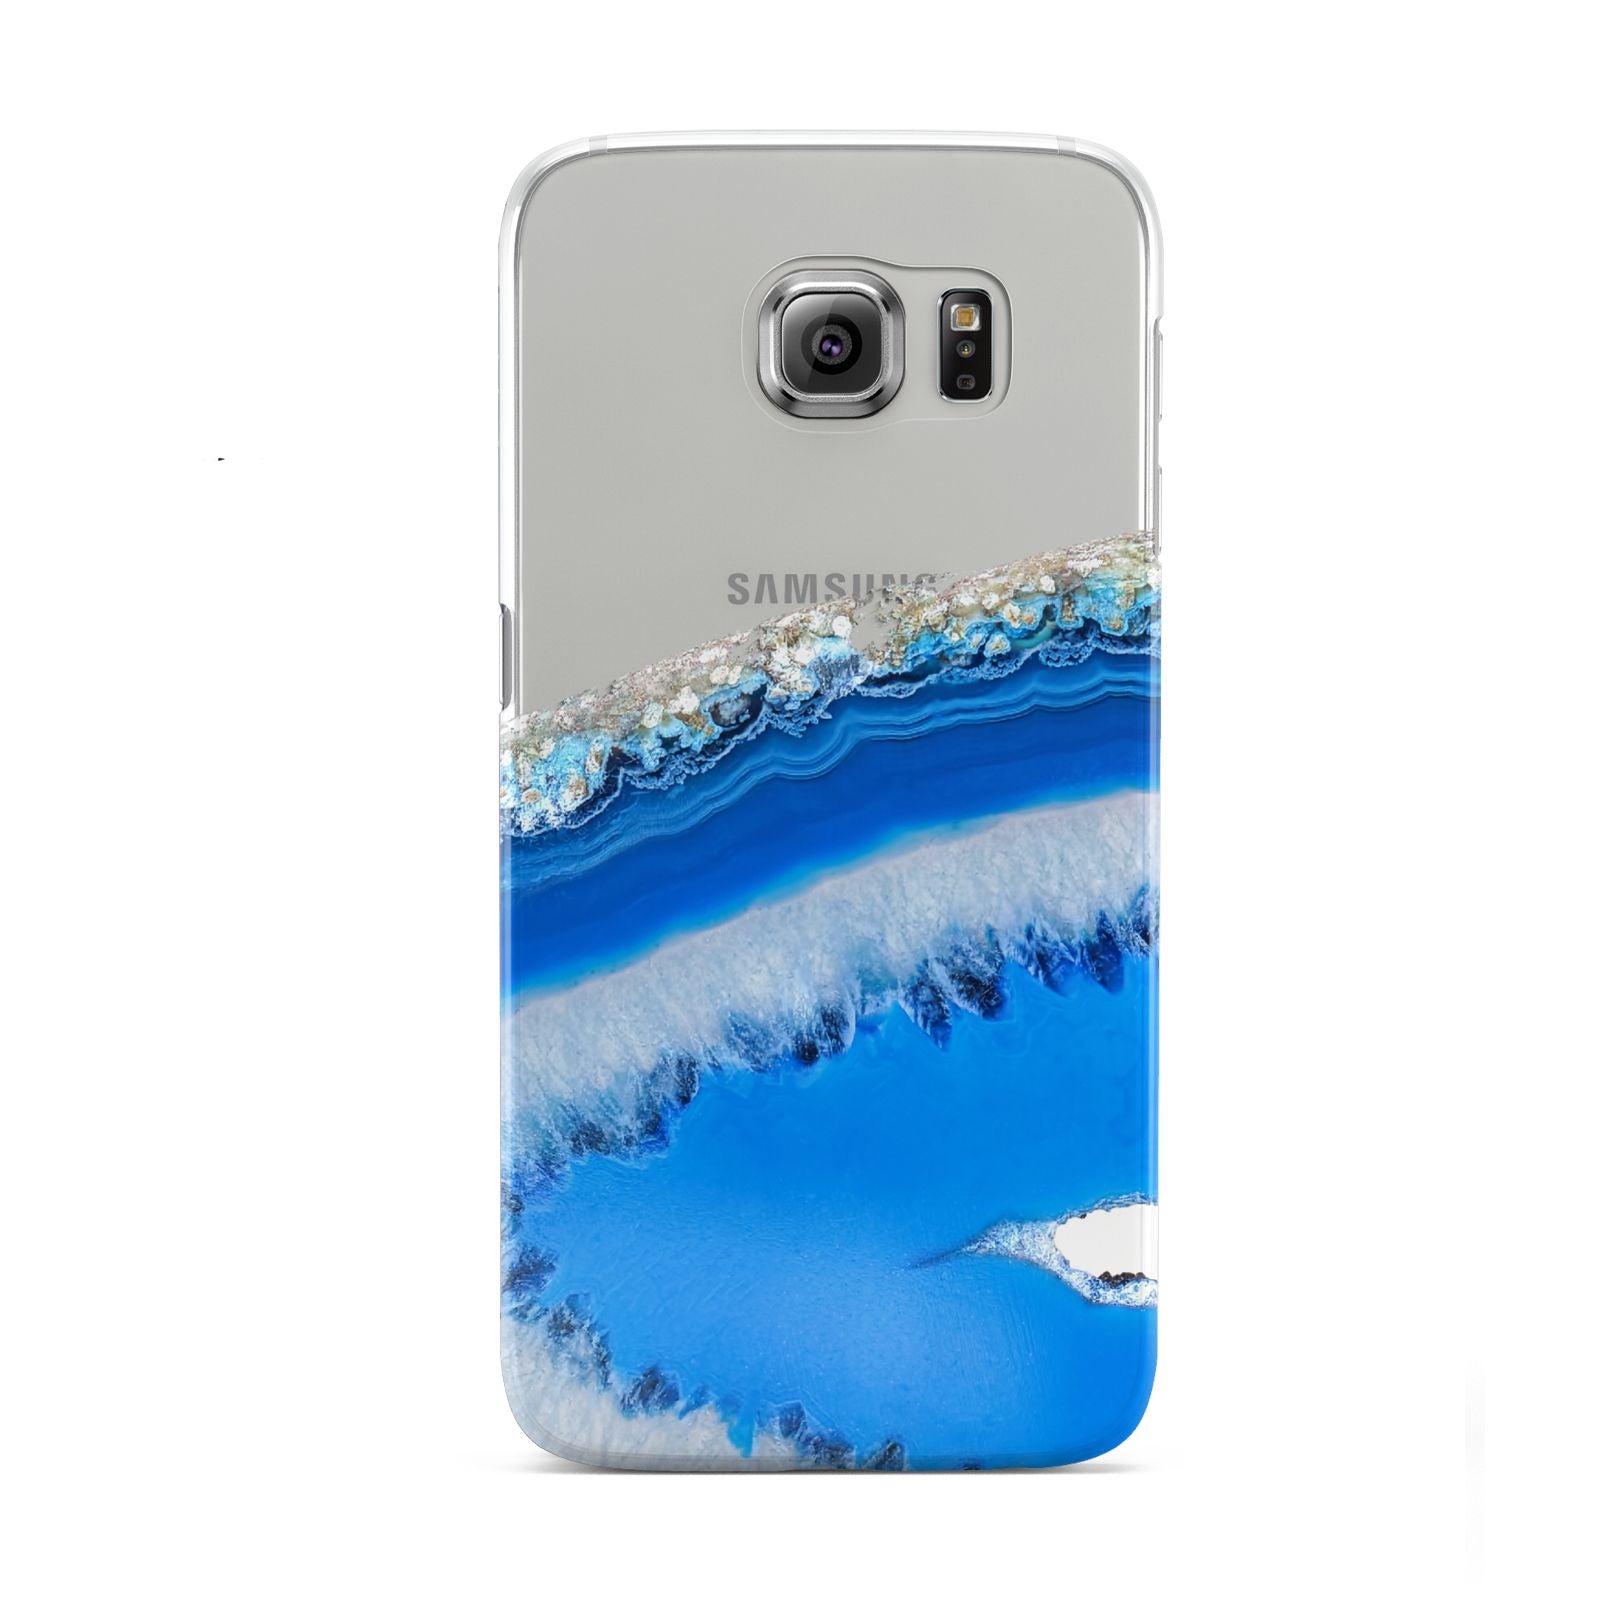 Agate Blue Samsung Galaxy S6 Case